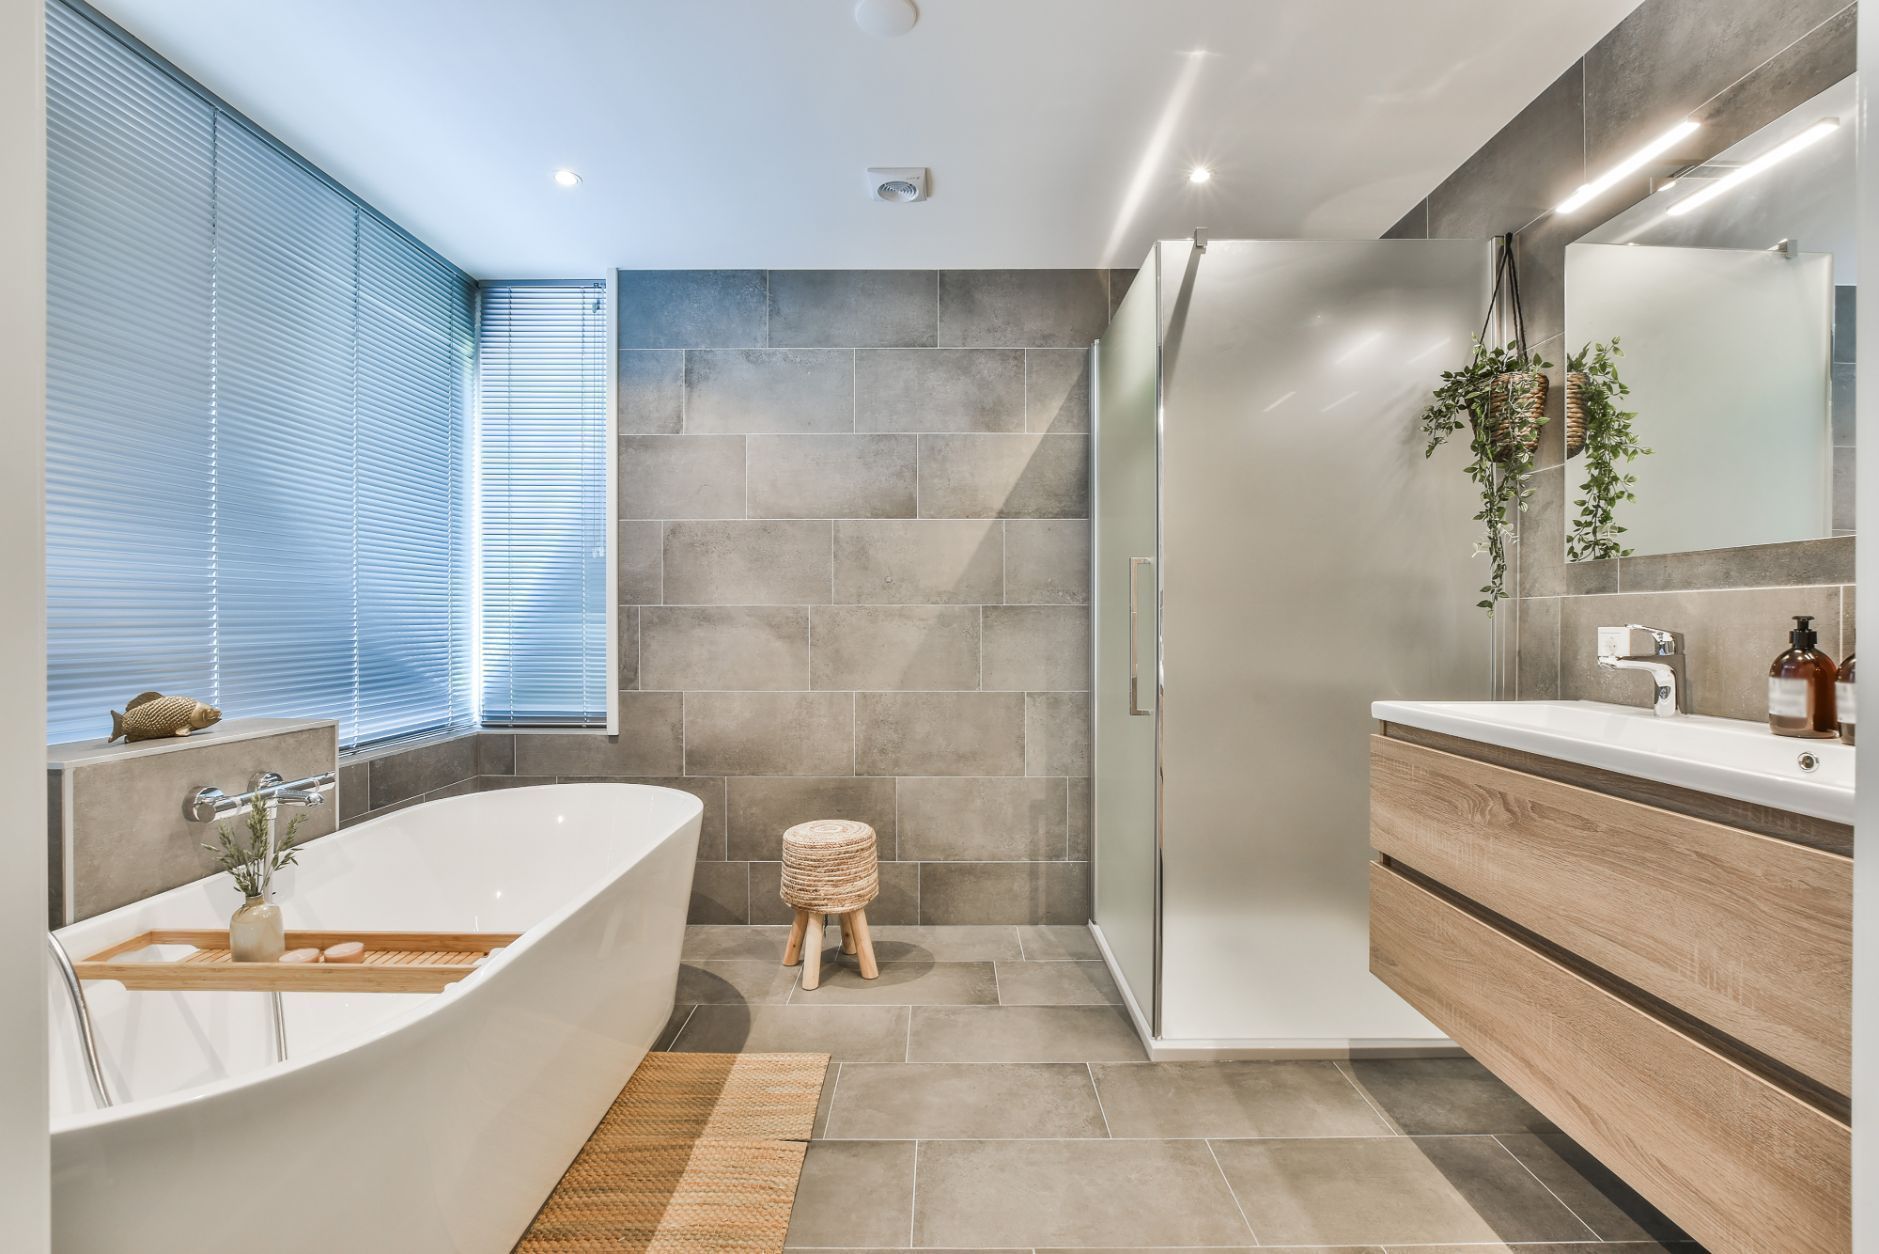 Discover 77+ beautiful bathroom interiors